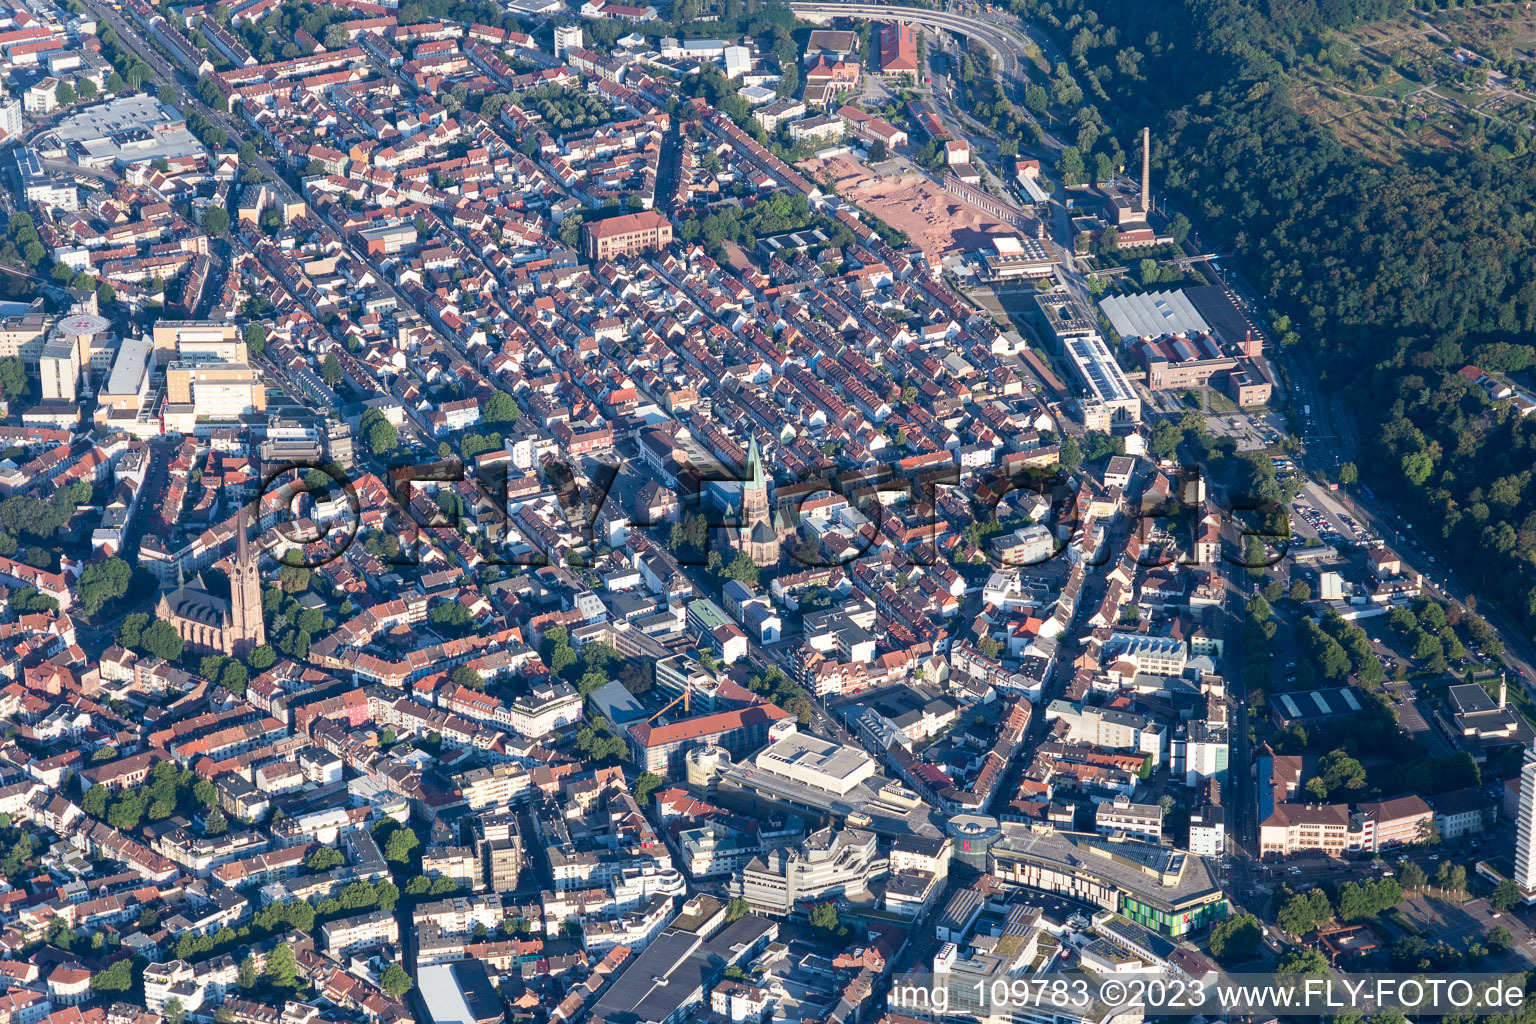 Bird's eye view of Kaiserslautern in the state Rhineland-Palatinate, Germany